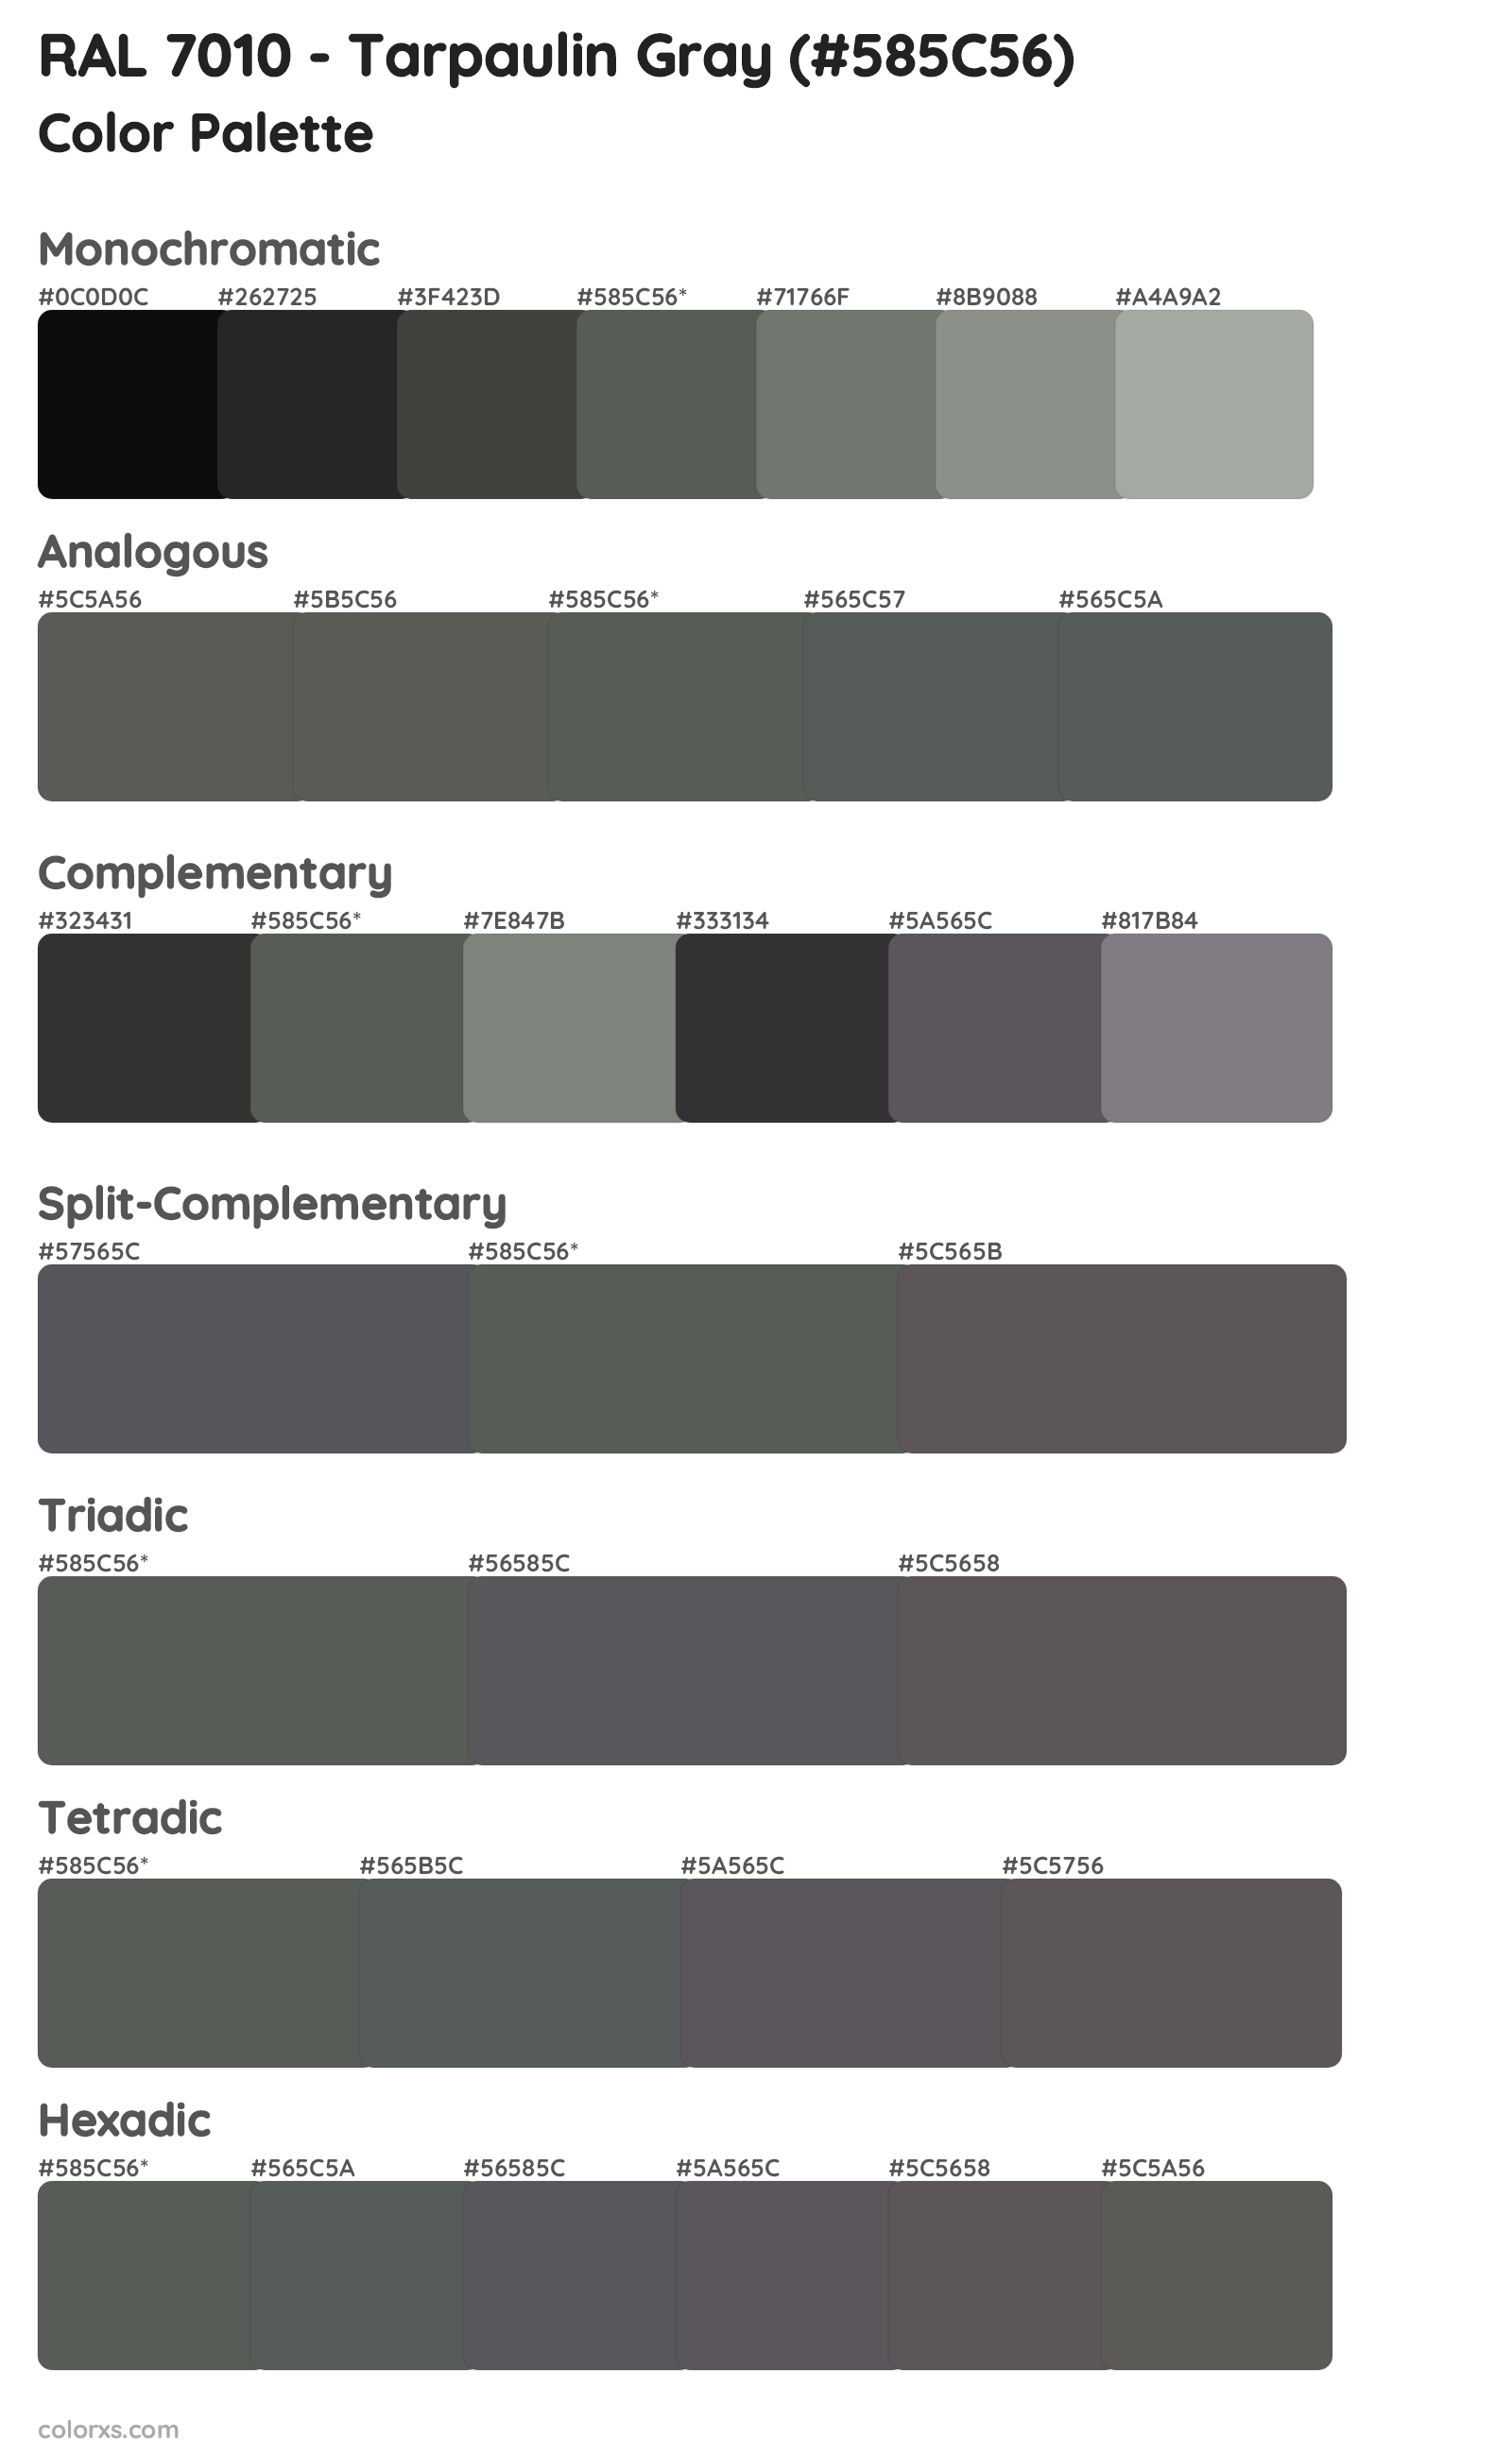 RAL 7010 - Tarpaulin Gray Color Scheme Palettes